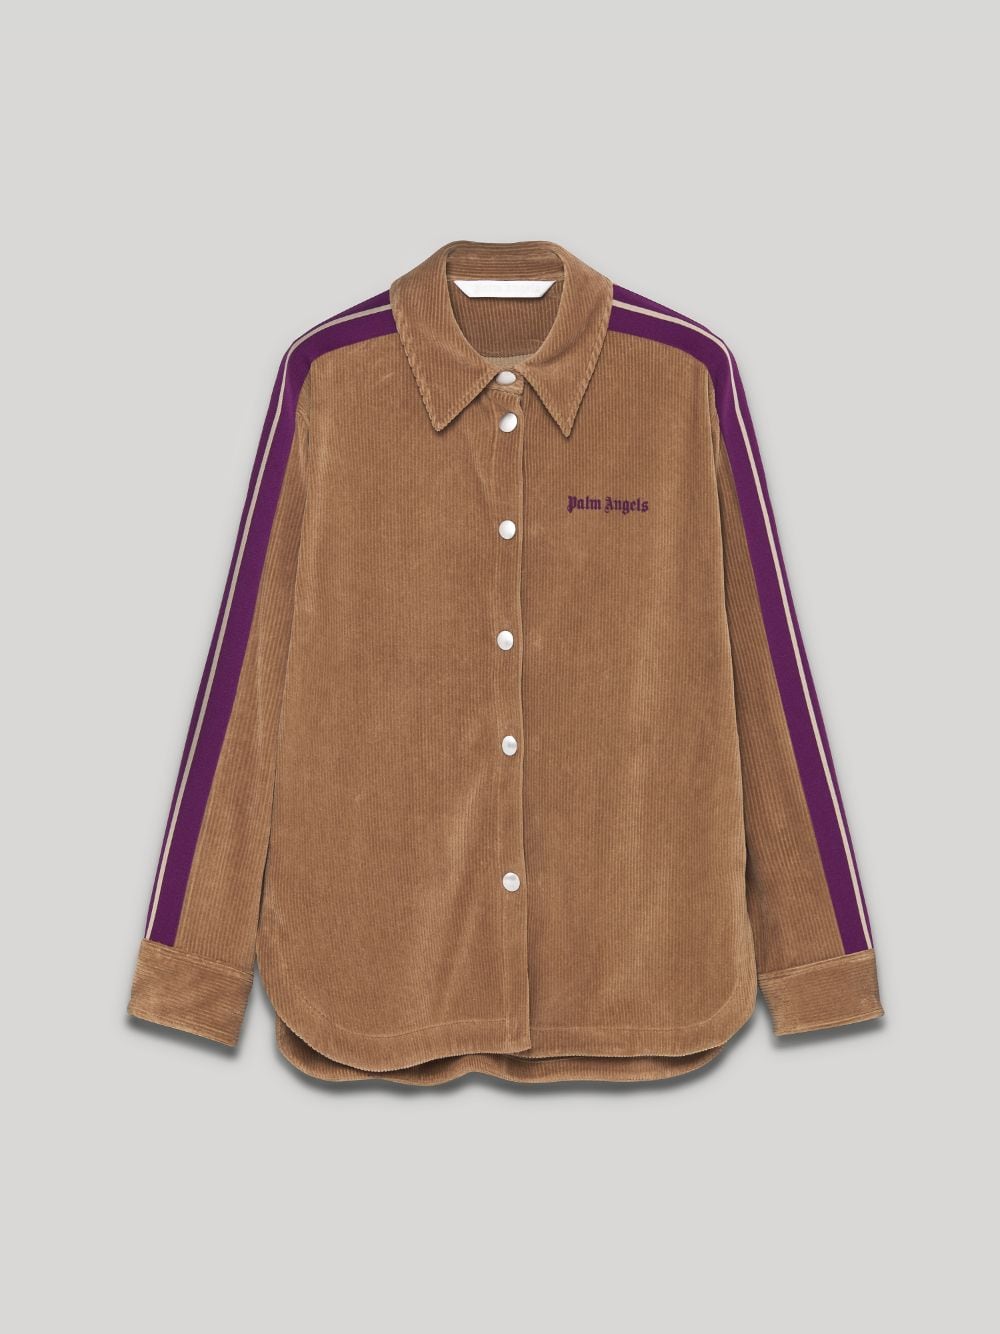 Palm Angels Corduroy jacket, Men's Clothing